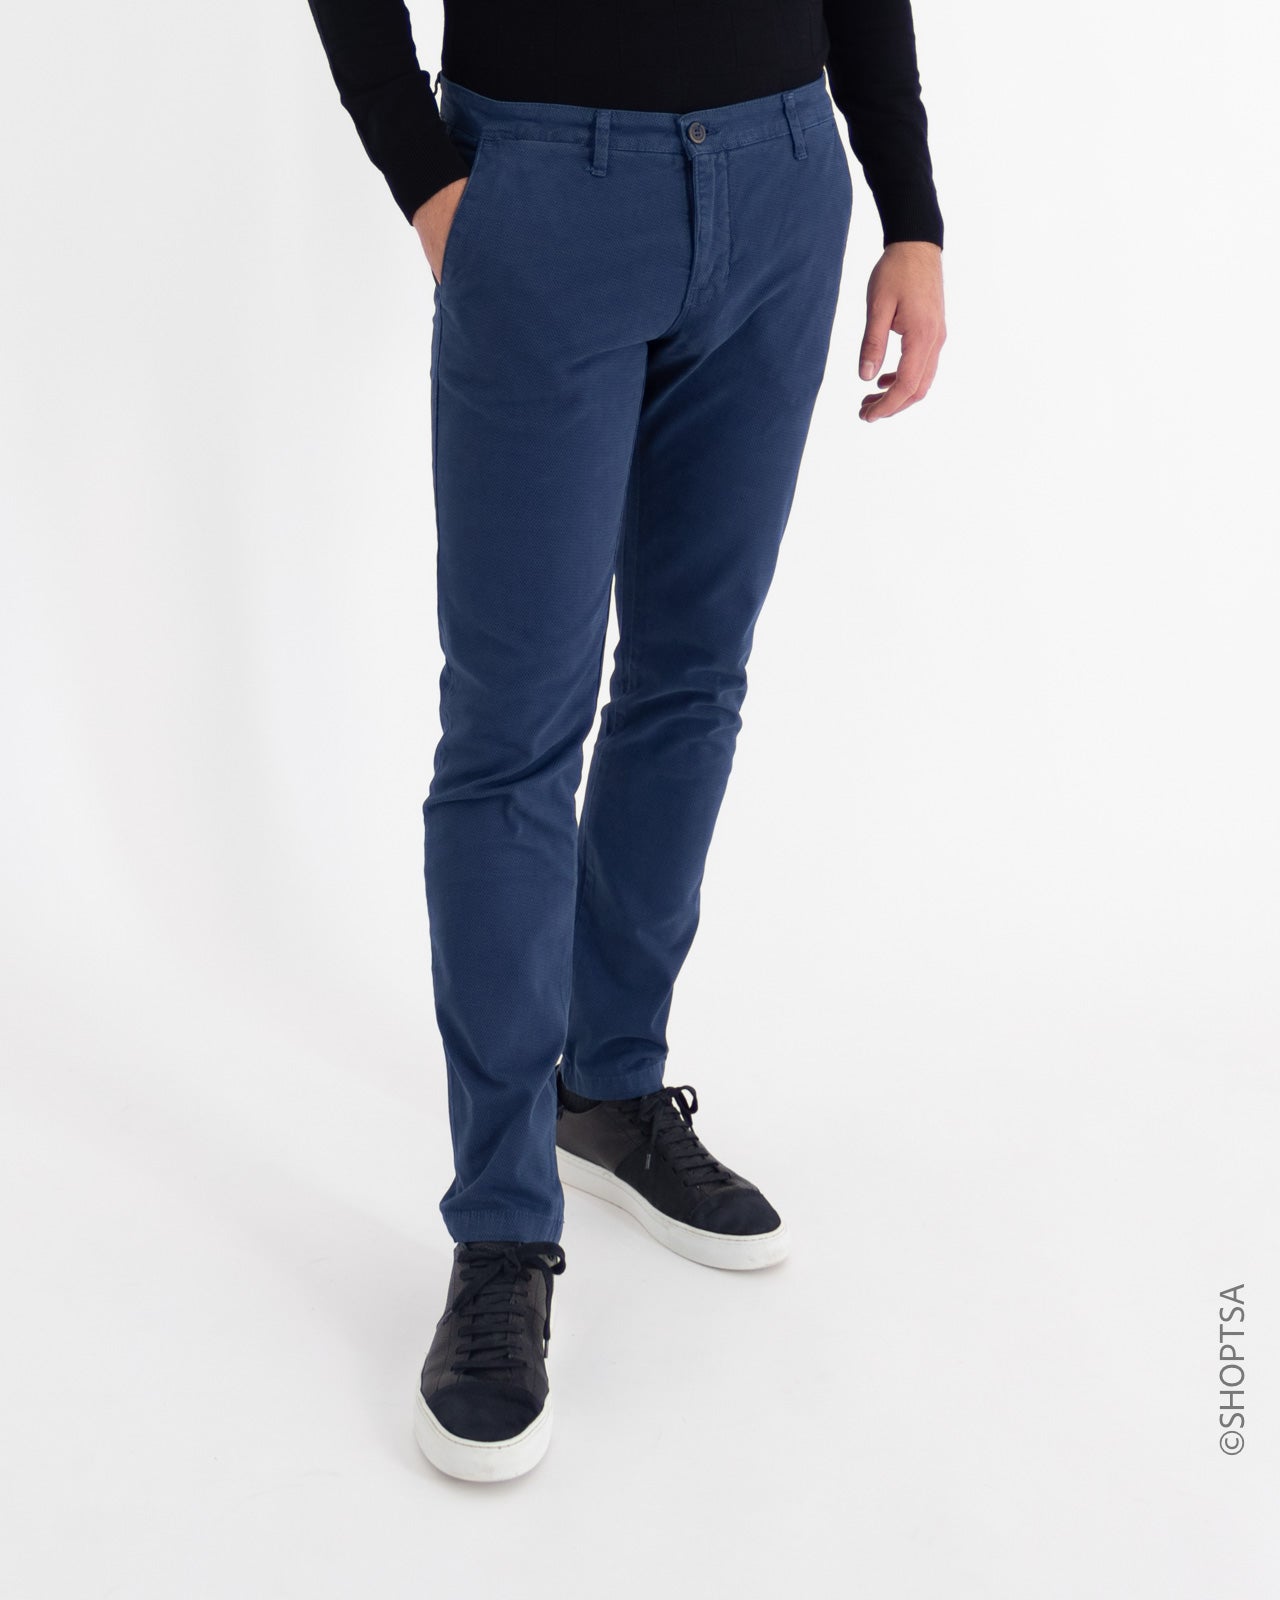 Indigo blue trousers